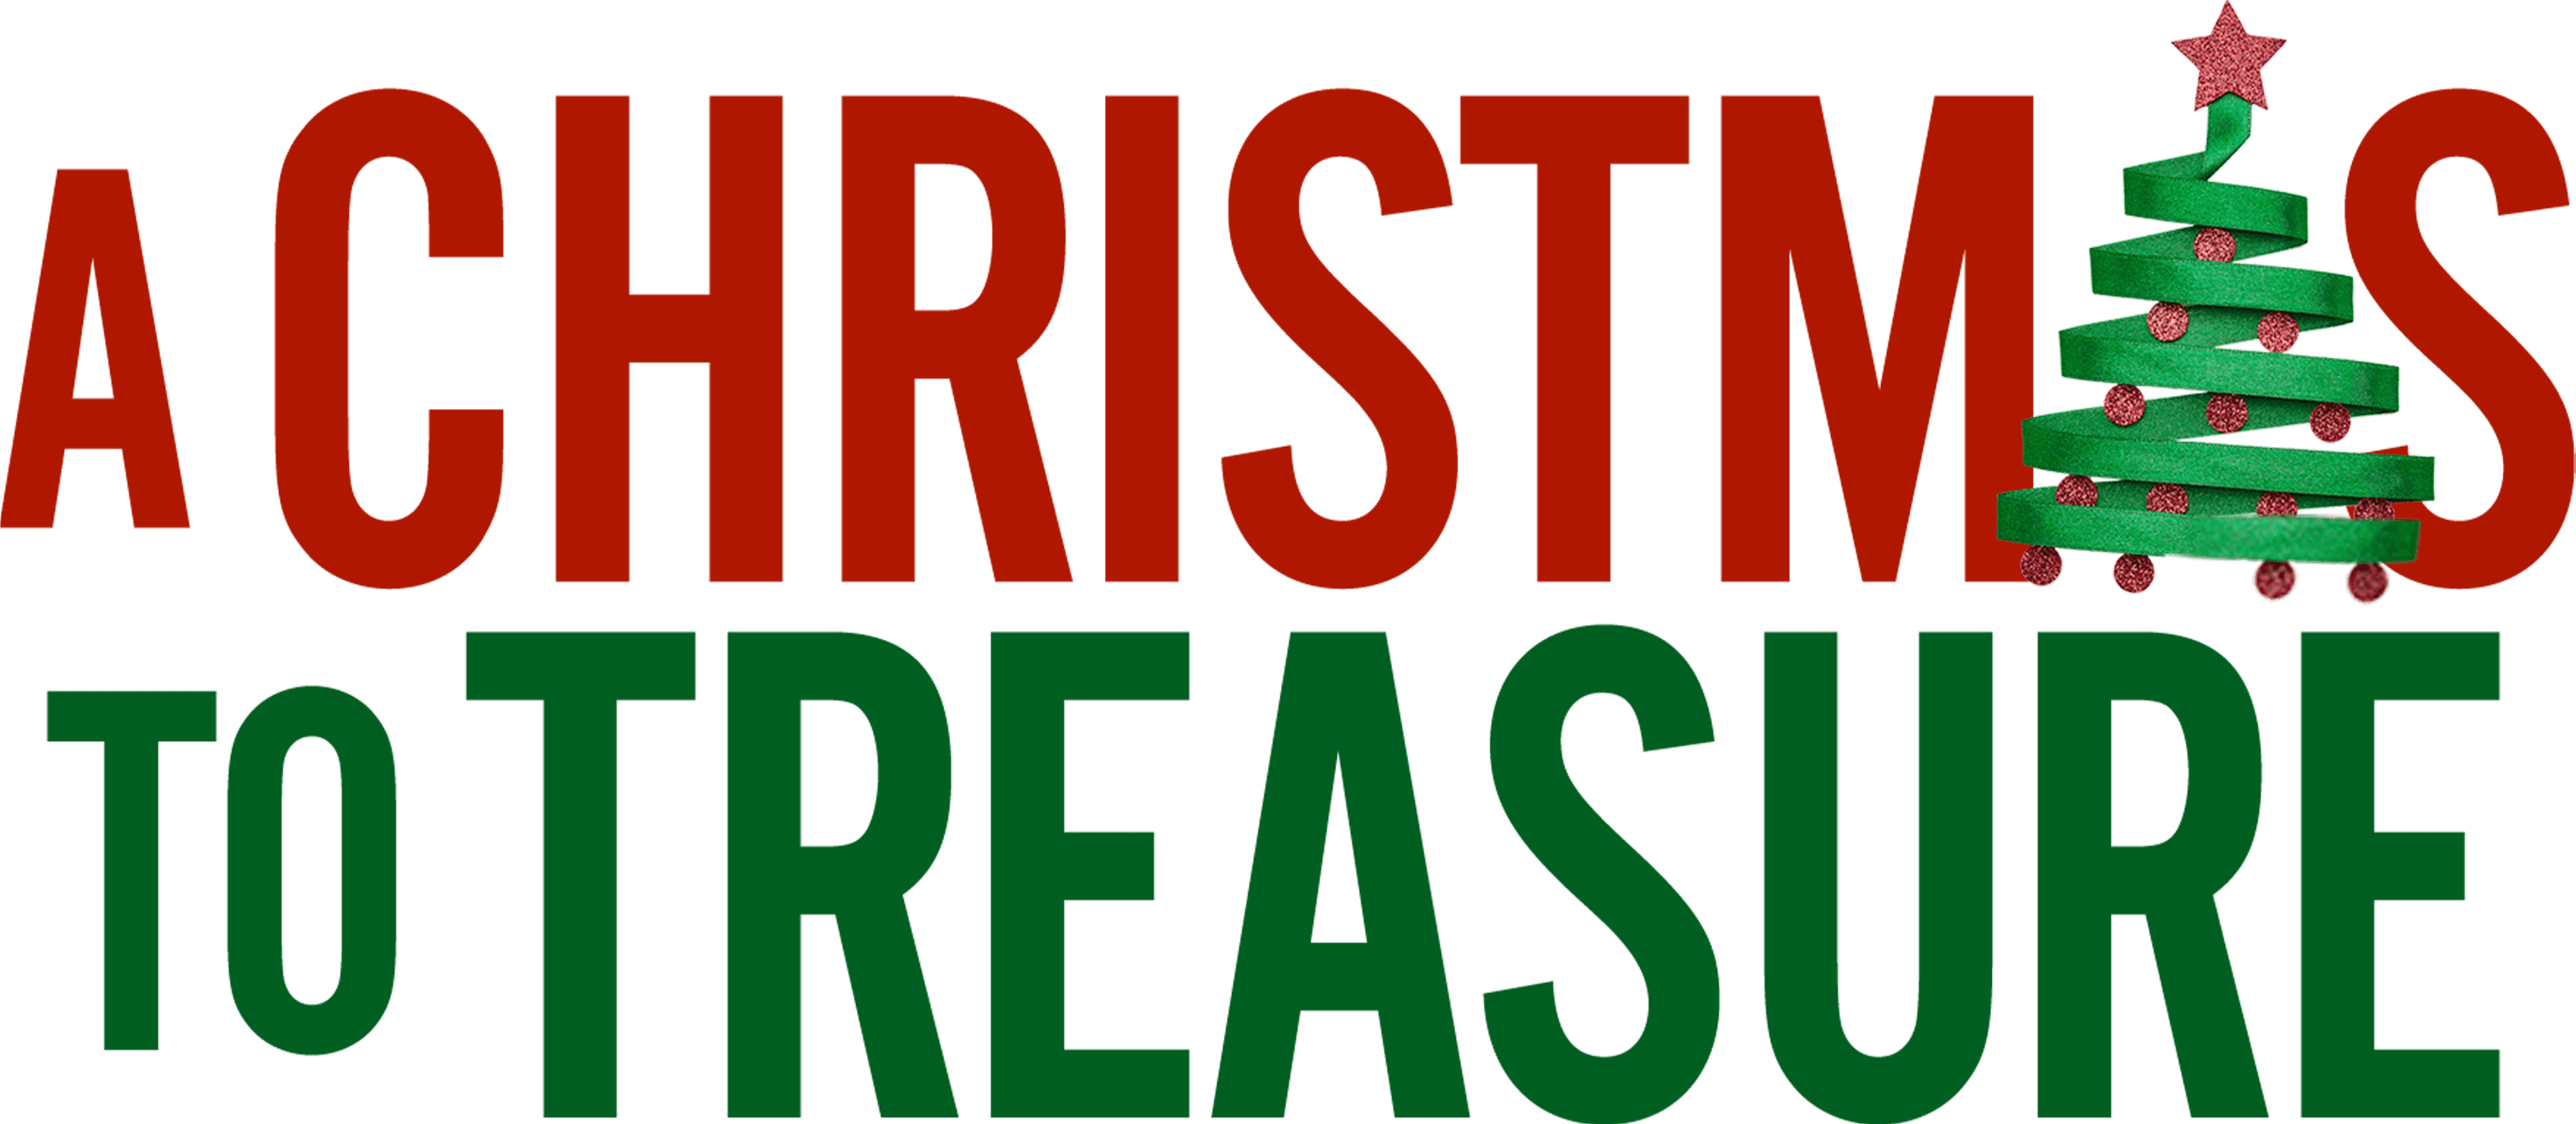 A Christmas to Treasure logo